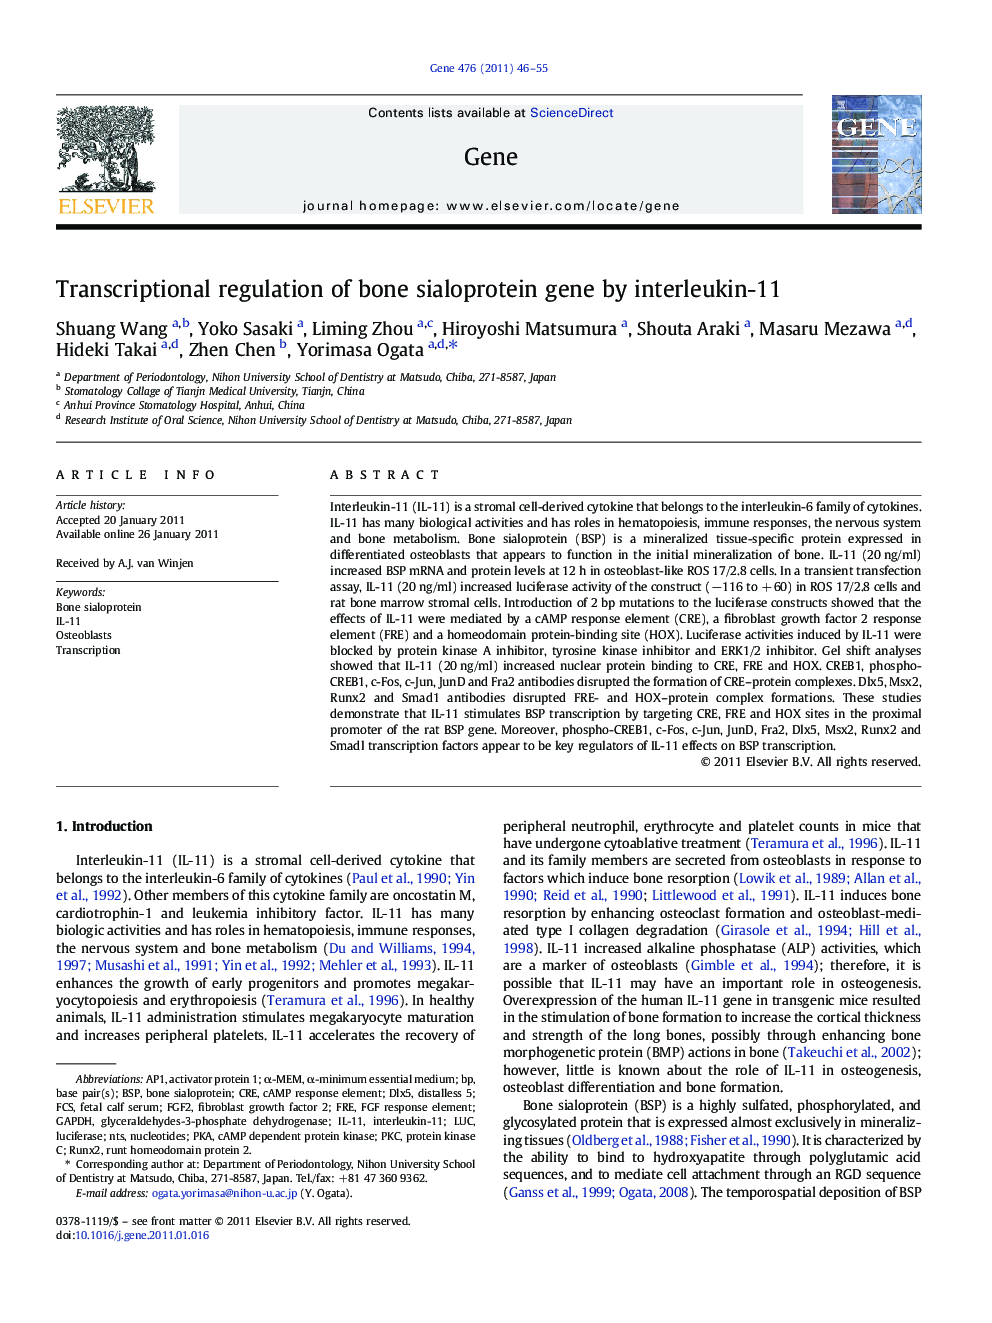 Transcriptional regulation of bone sialoprotein gene by interleukin-11